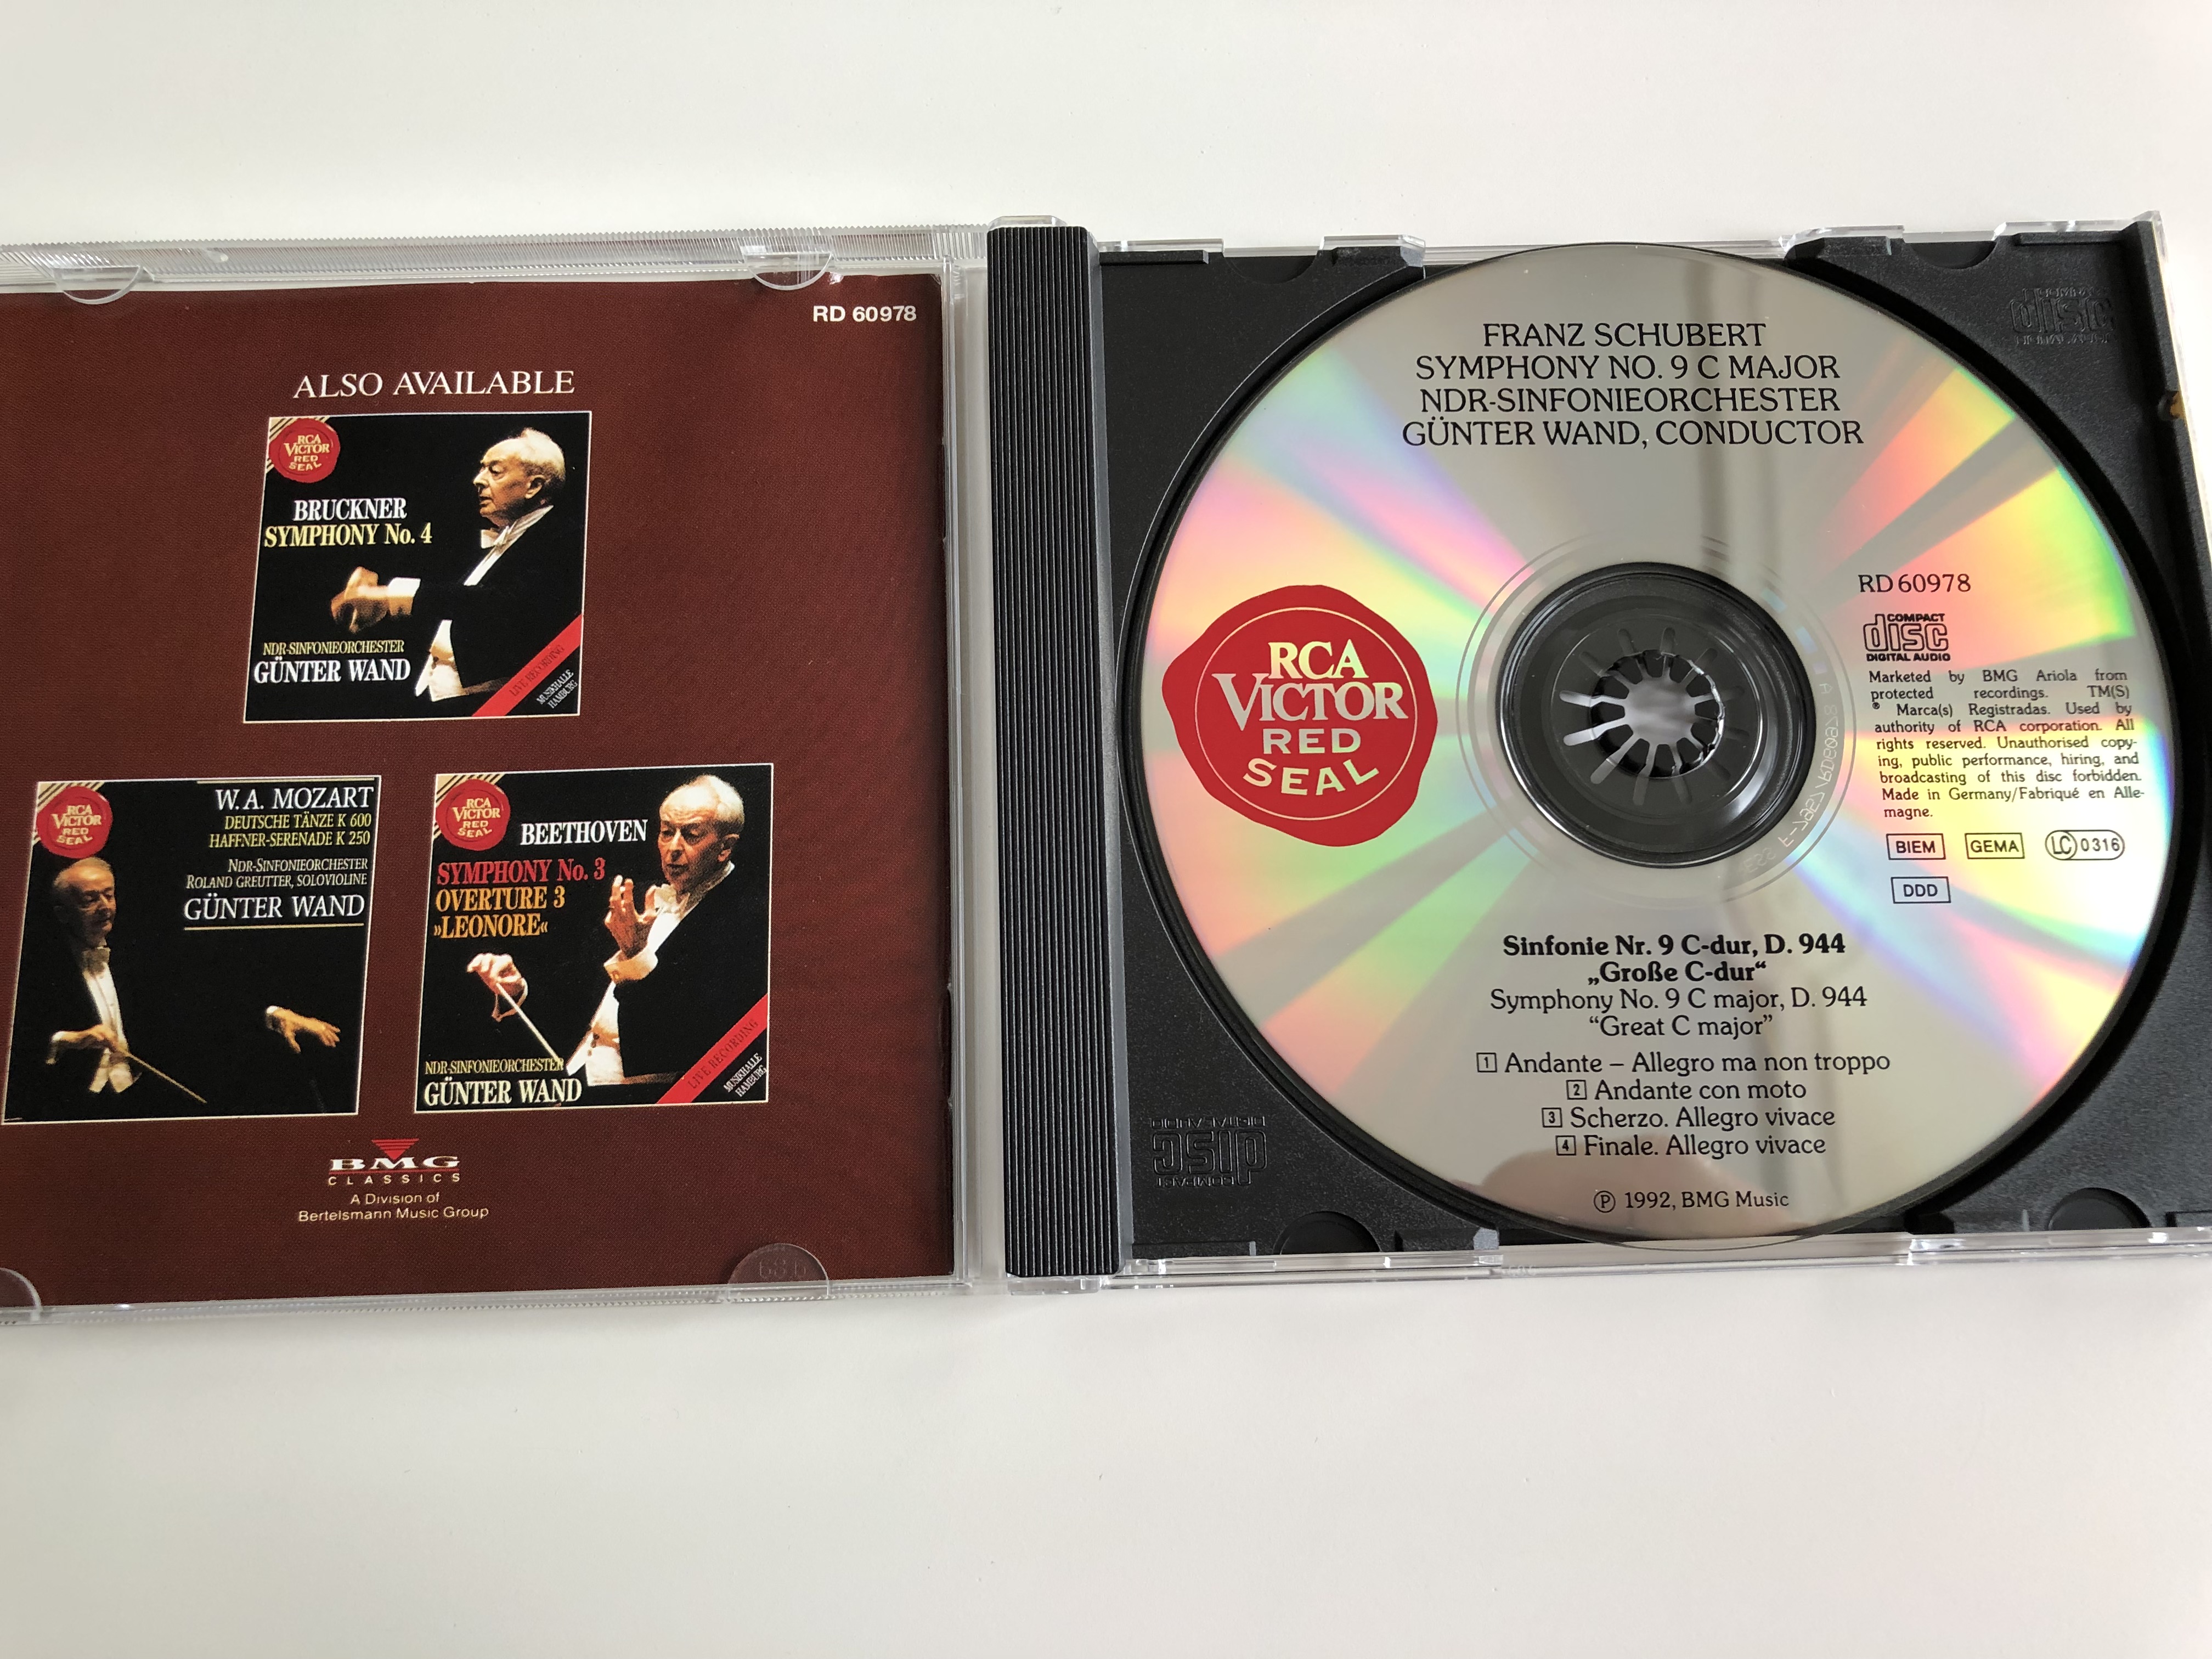 schubert-symphony-no.-9-the-great-die-grobe-c-dur-la-grande-ndr-sinfonieorchester-g-nter-wand-rca-victor-red-seal-audio-cd-1992-rd60978-4-.jpg